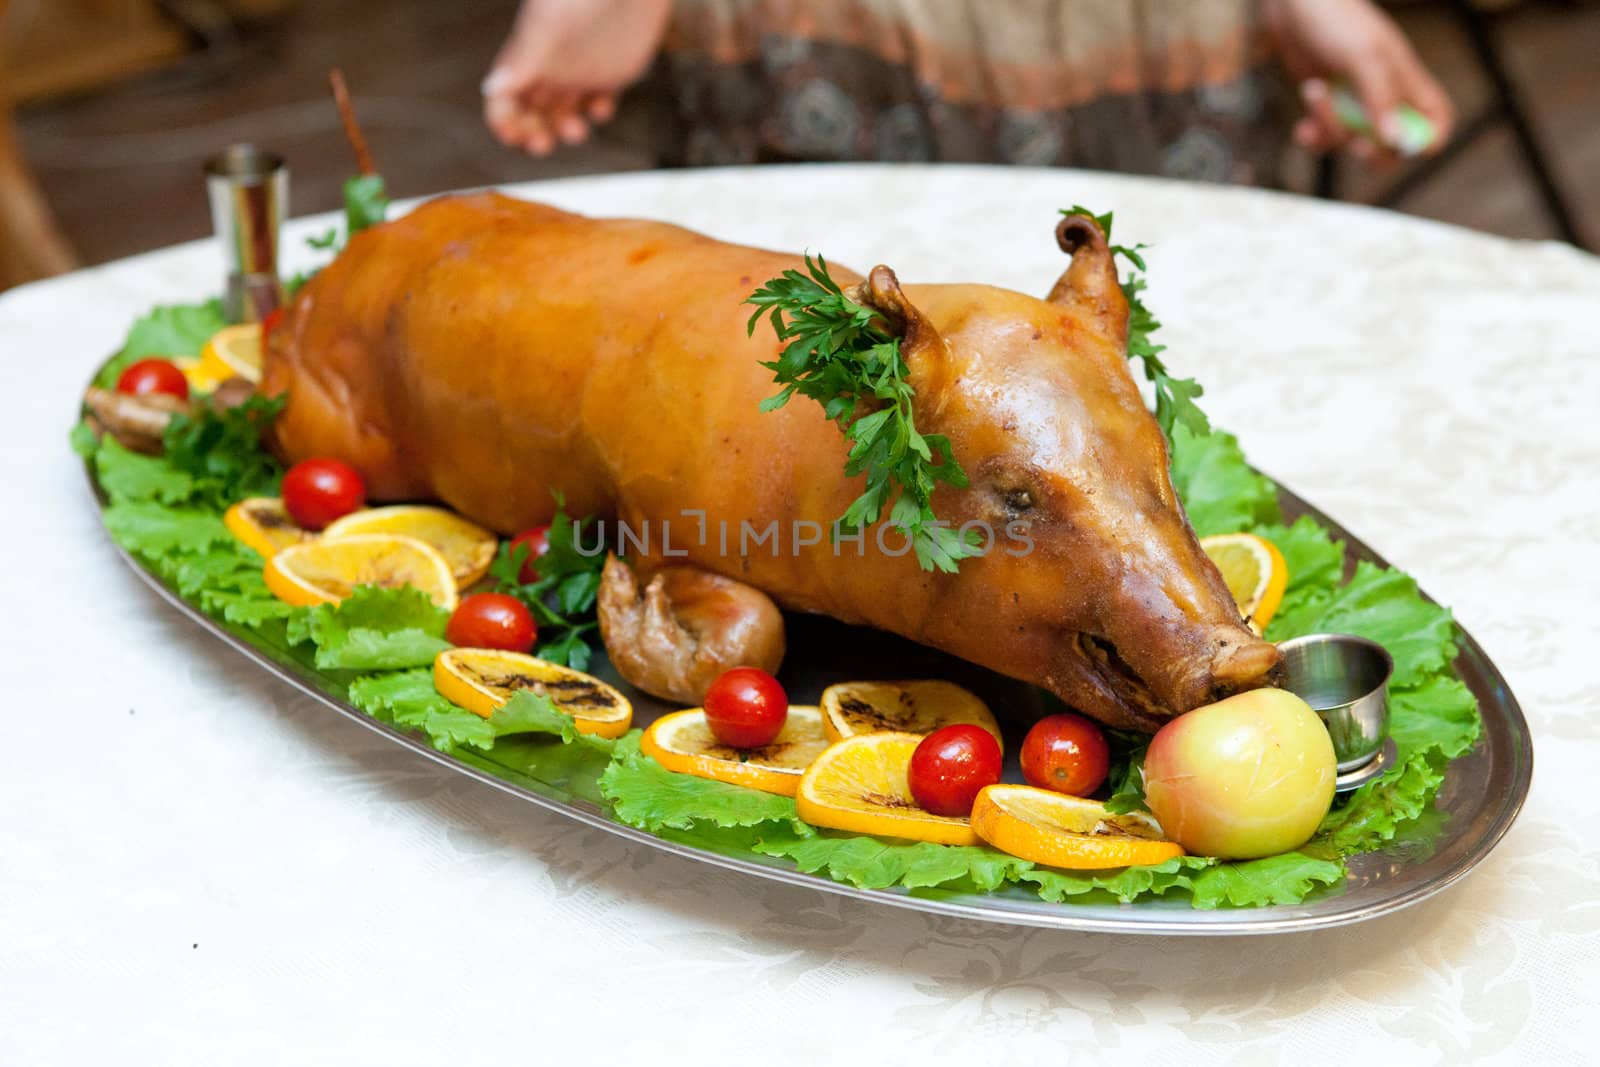 prepared pork on the plate